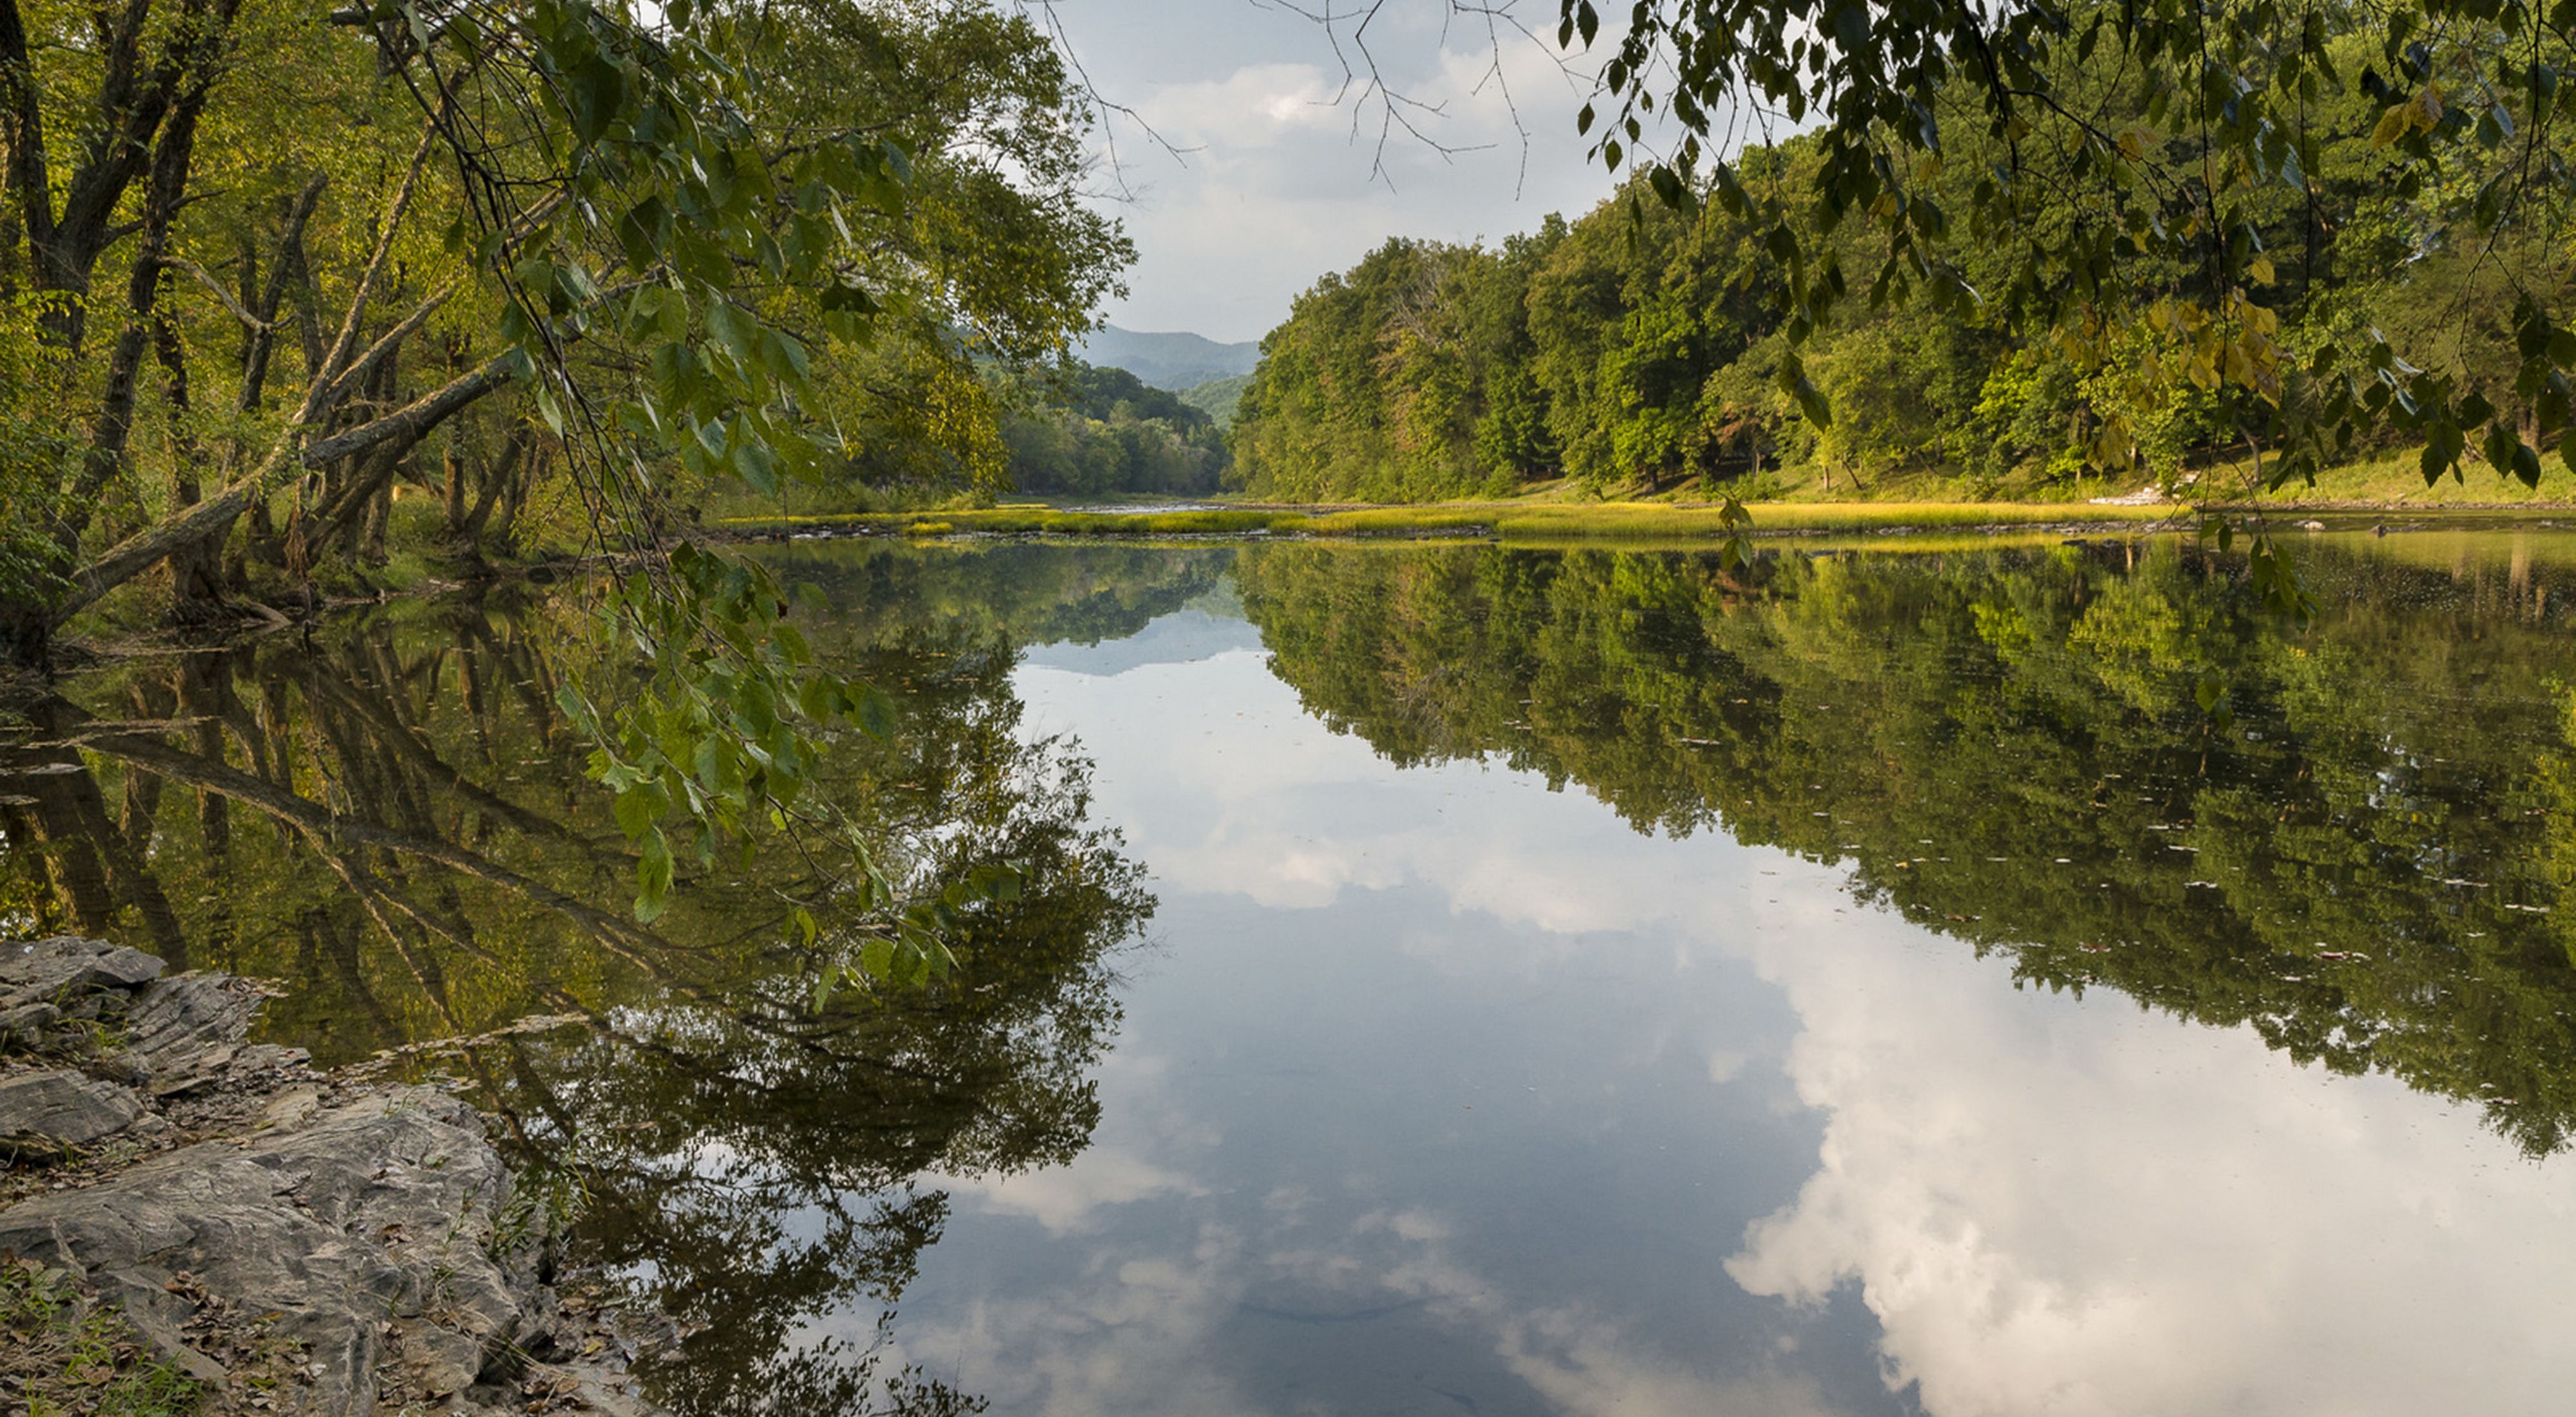 Greenbrier River in West Virginia.